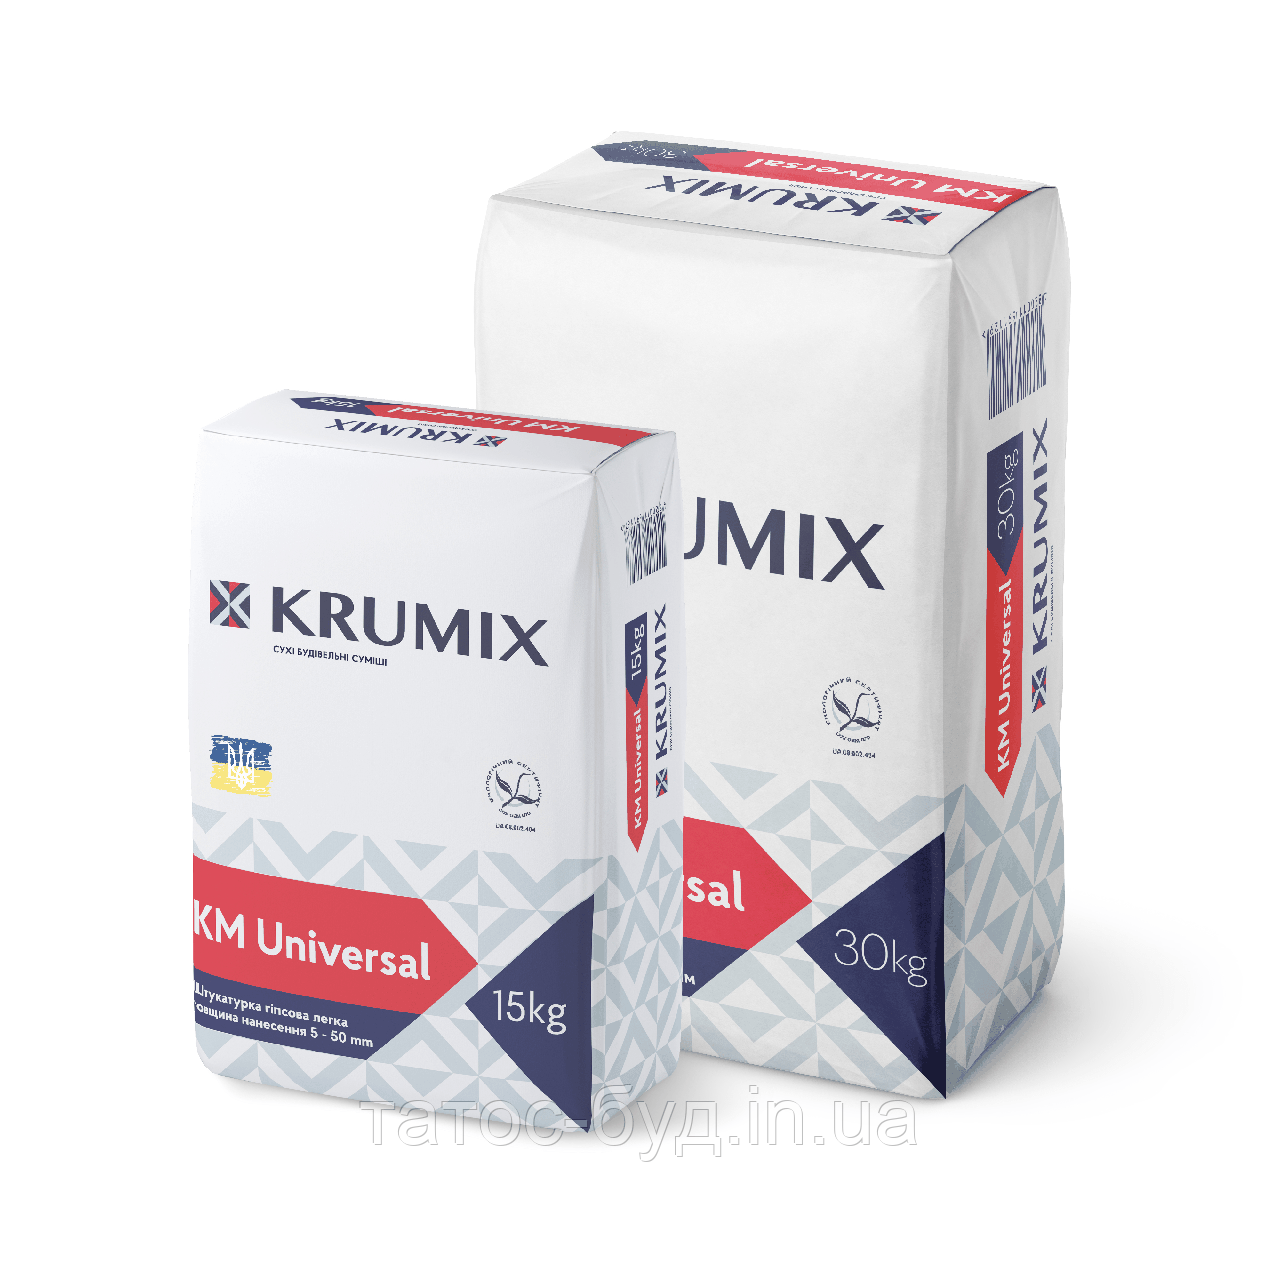 Штукатурка Universal TM KRUMIX, 30 кг (аналог Knauf Rotband)